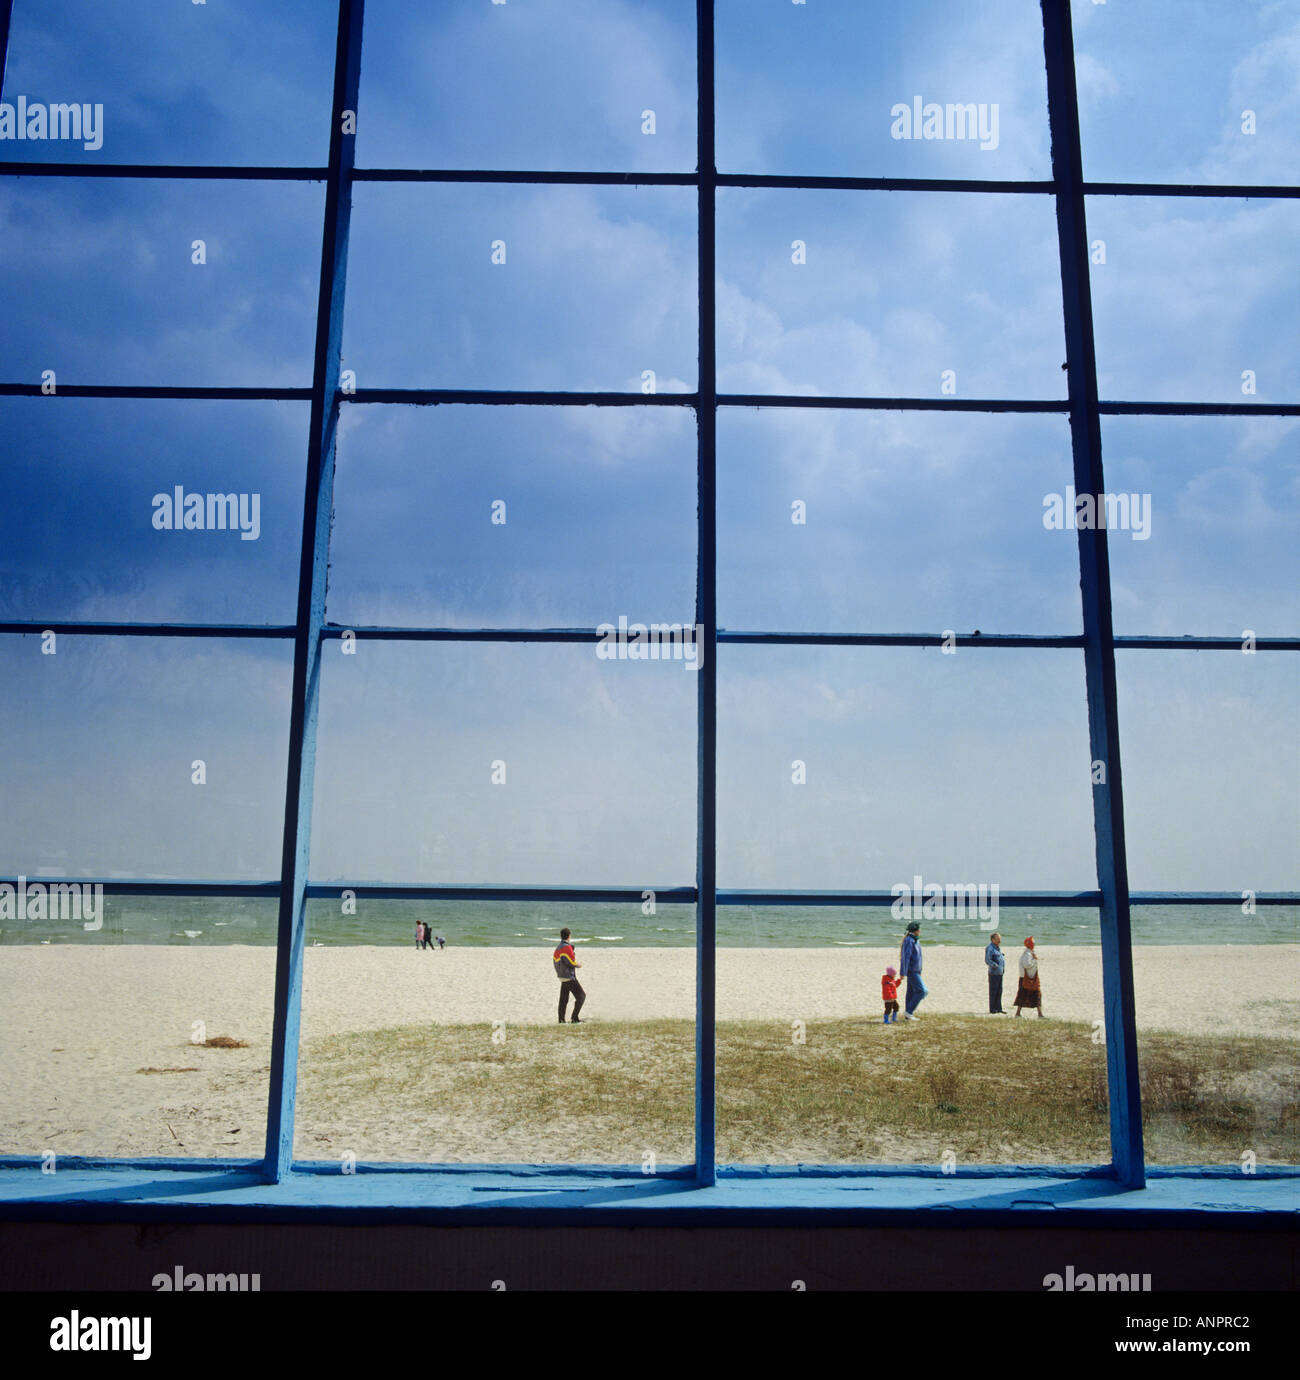 Coastline and sandy beach at Gdansk viewed through windows of a beachside public amenity Gdansk Poland Stock Photo